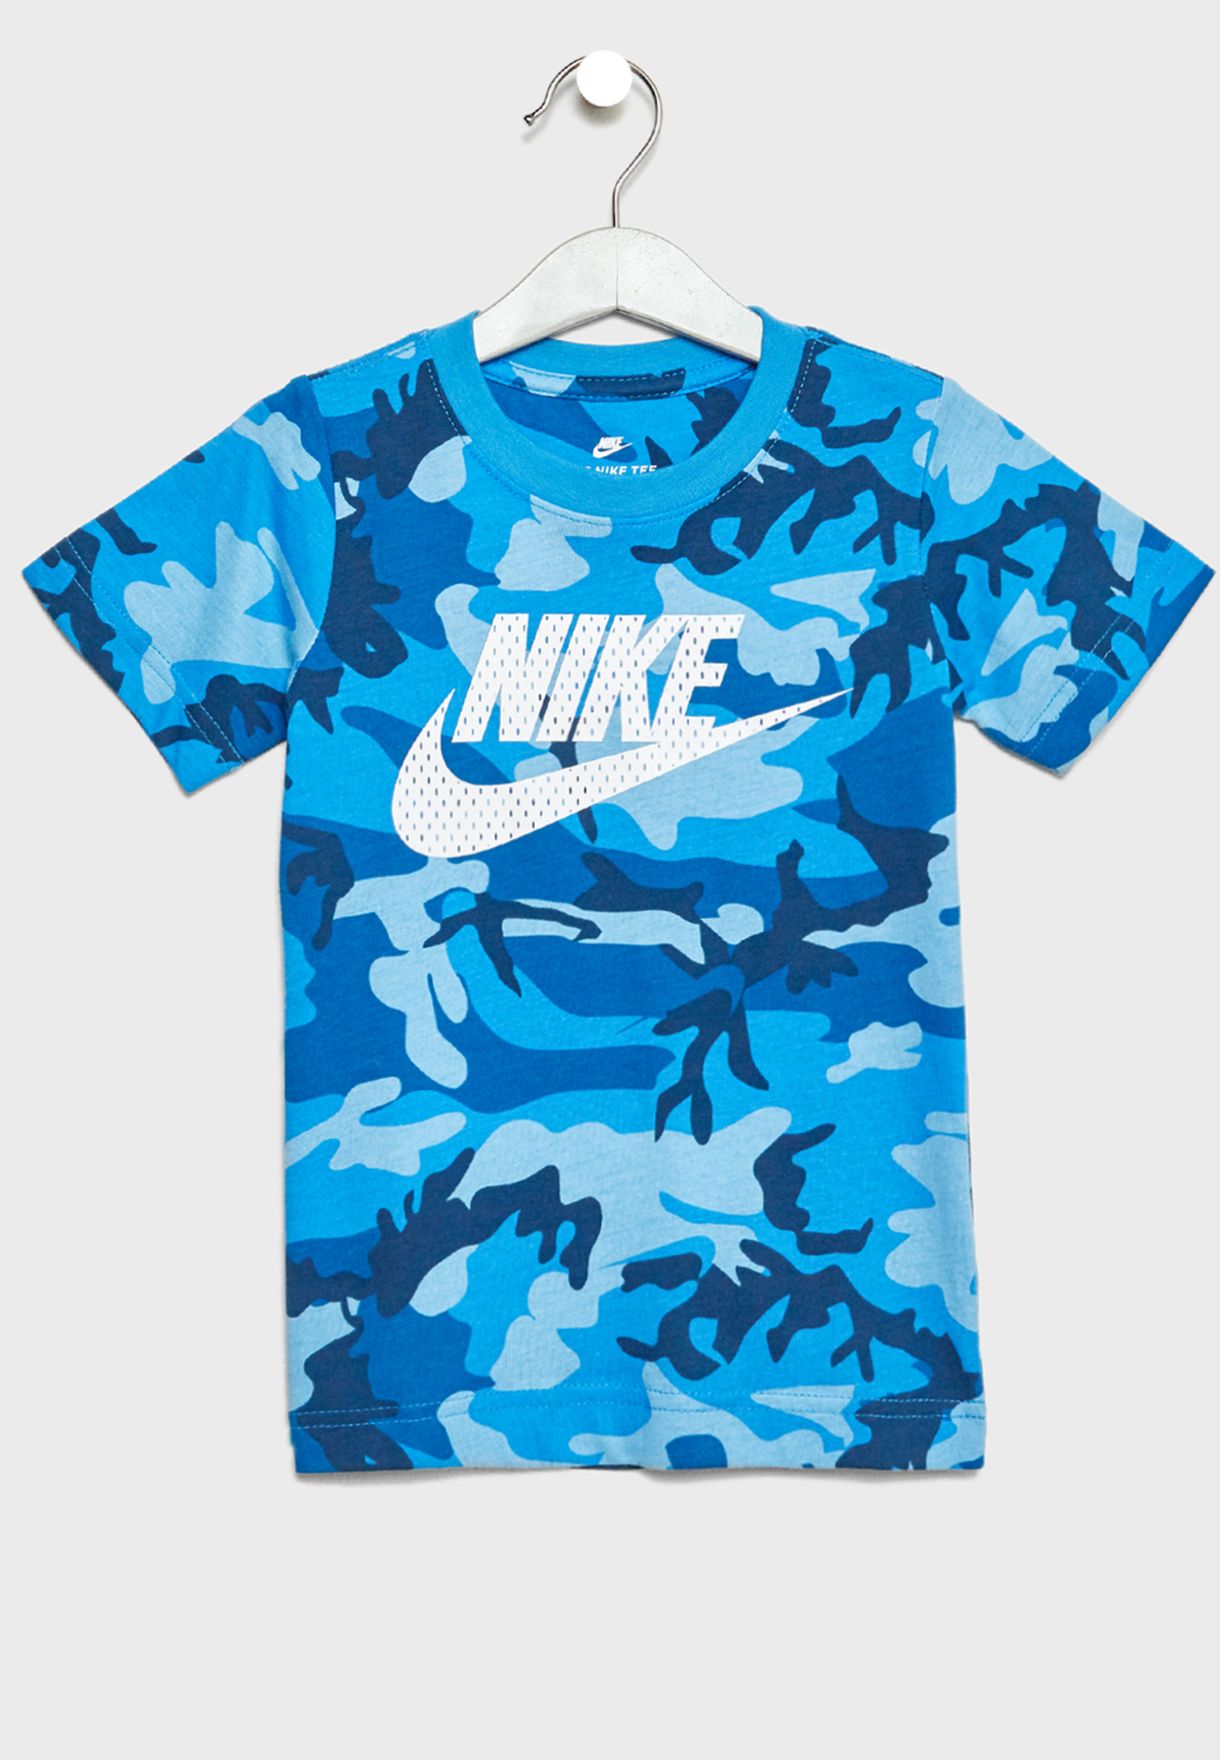 blue nike shirt boys Shop Clothing 